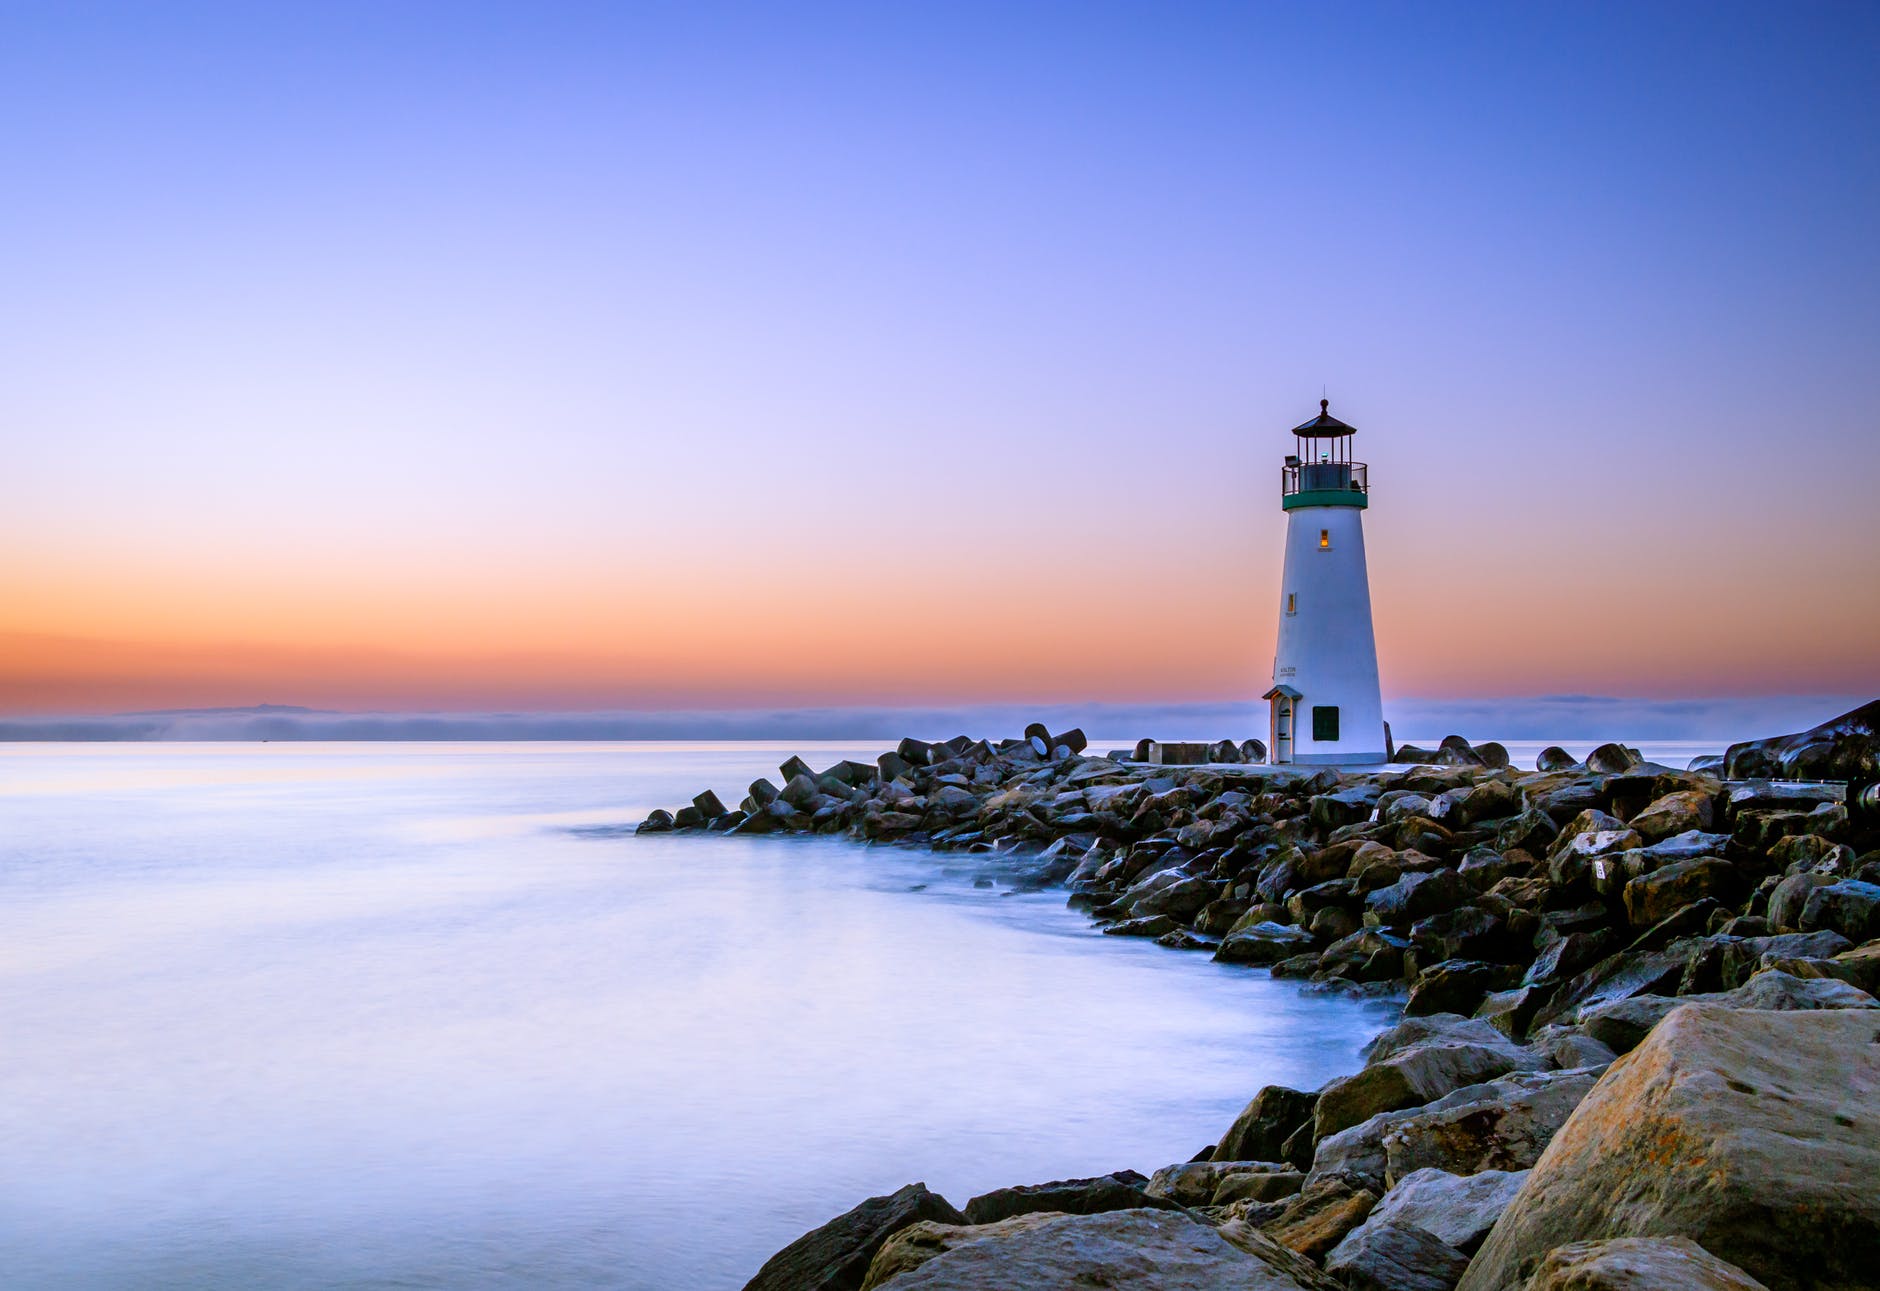 A lighthouse on a rocky point at sundown